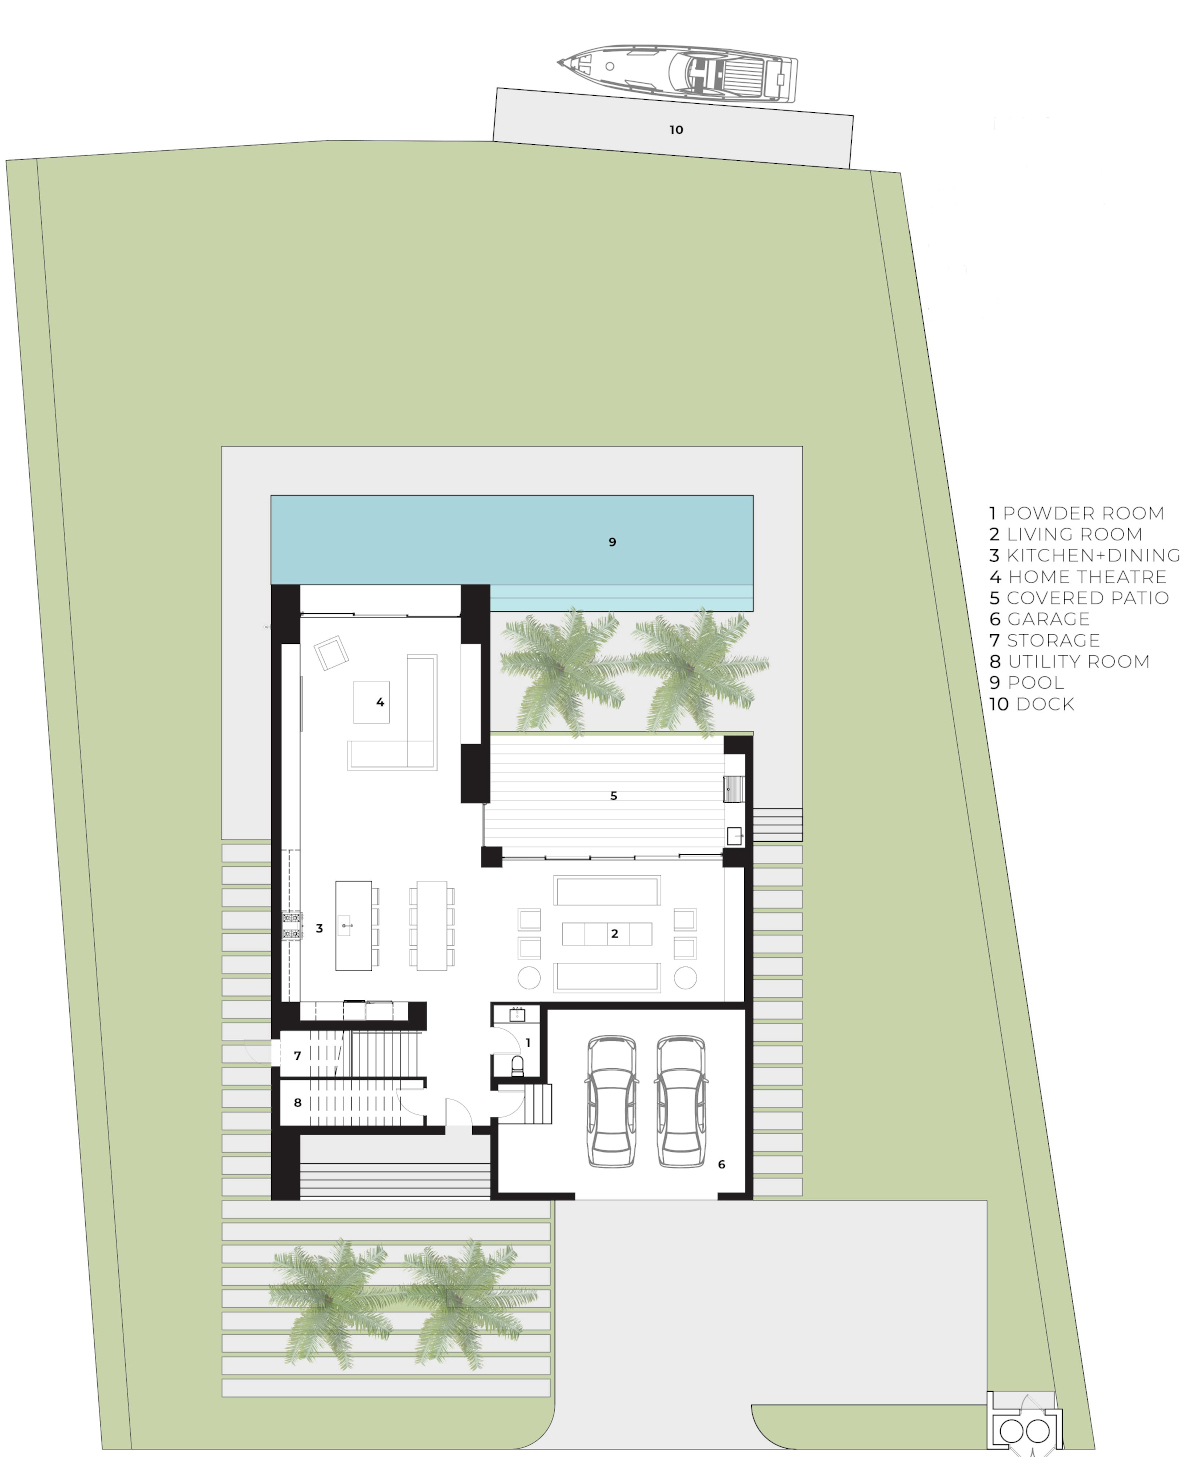 Site/First Floor Plan